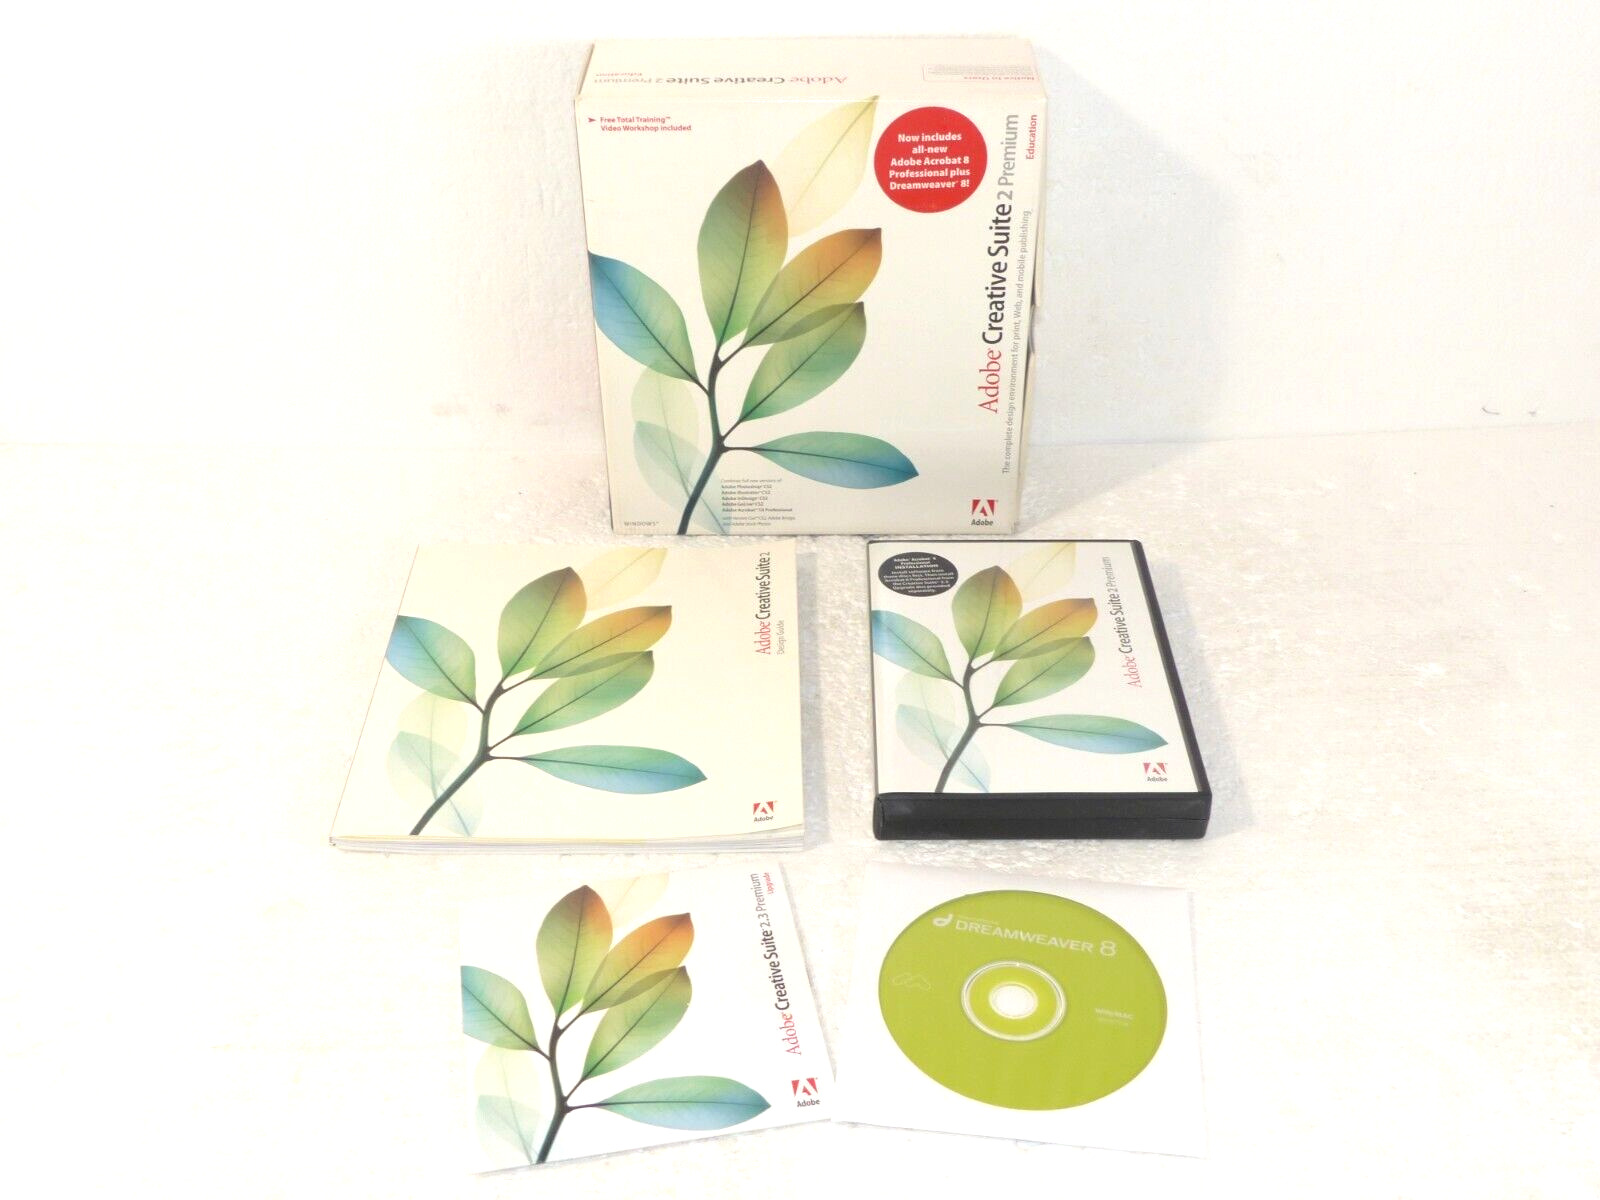 Adobe Creative Suite 2 Premium (DVD, 2005, 8-Disc) Retail Box Set Windows w/ Key